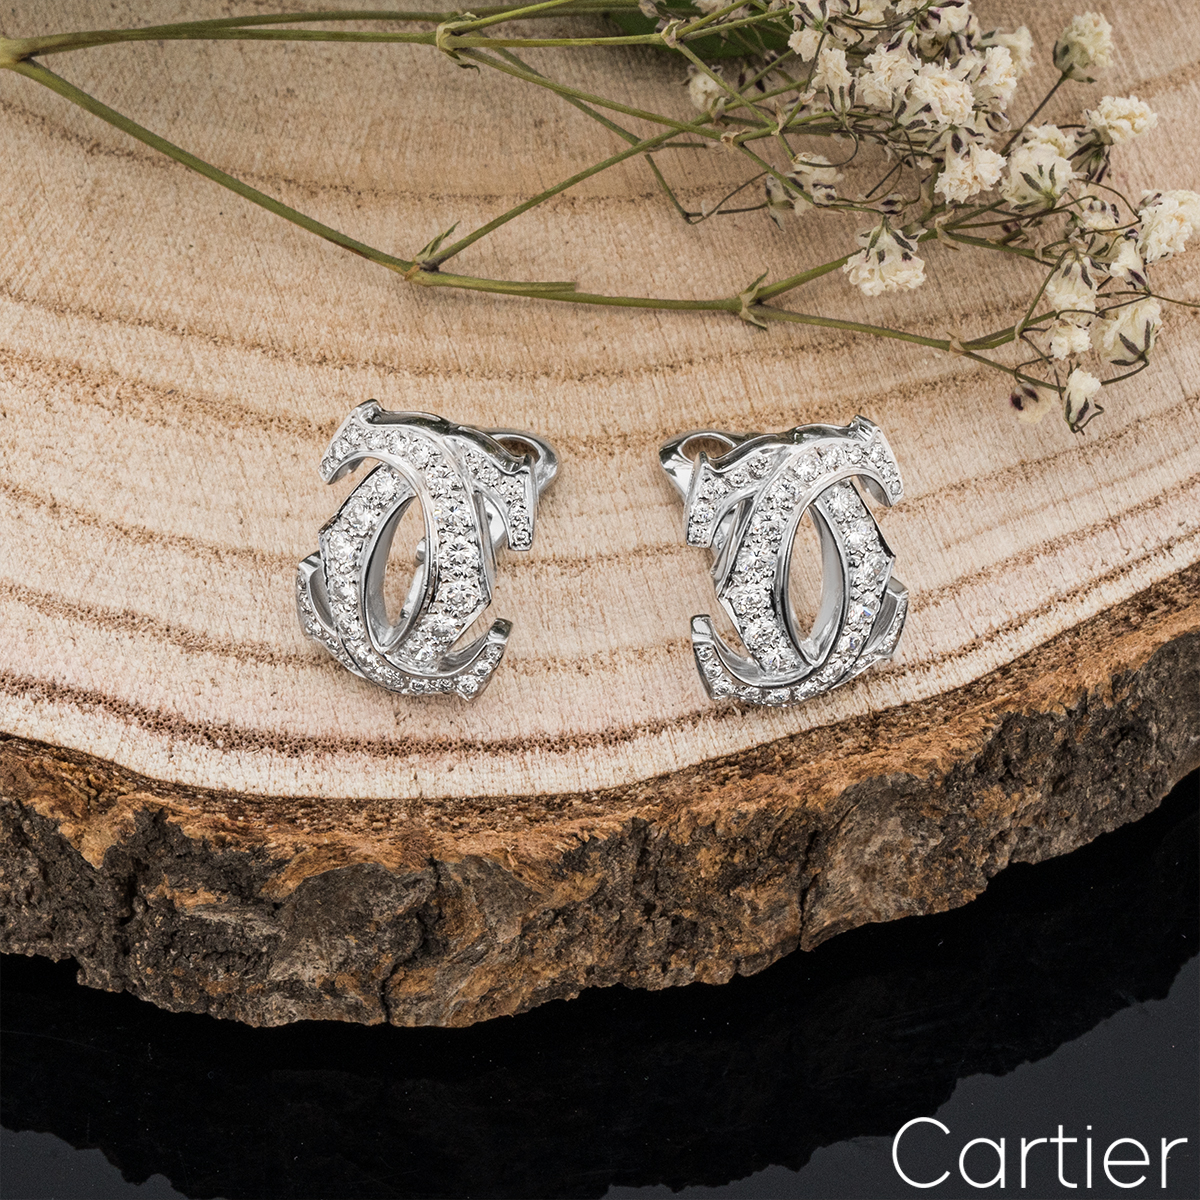 Cartier White Gold Diamond Penelope Large Double C Earrings